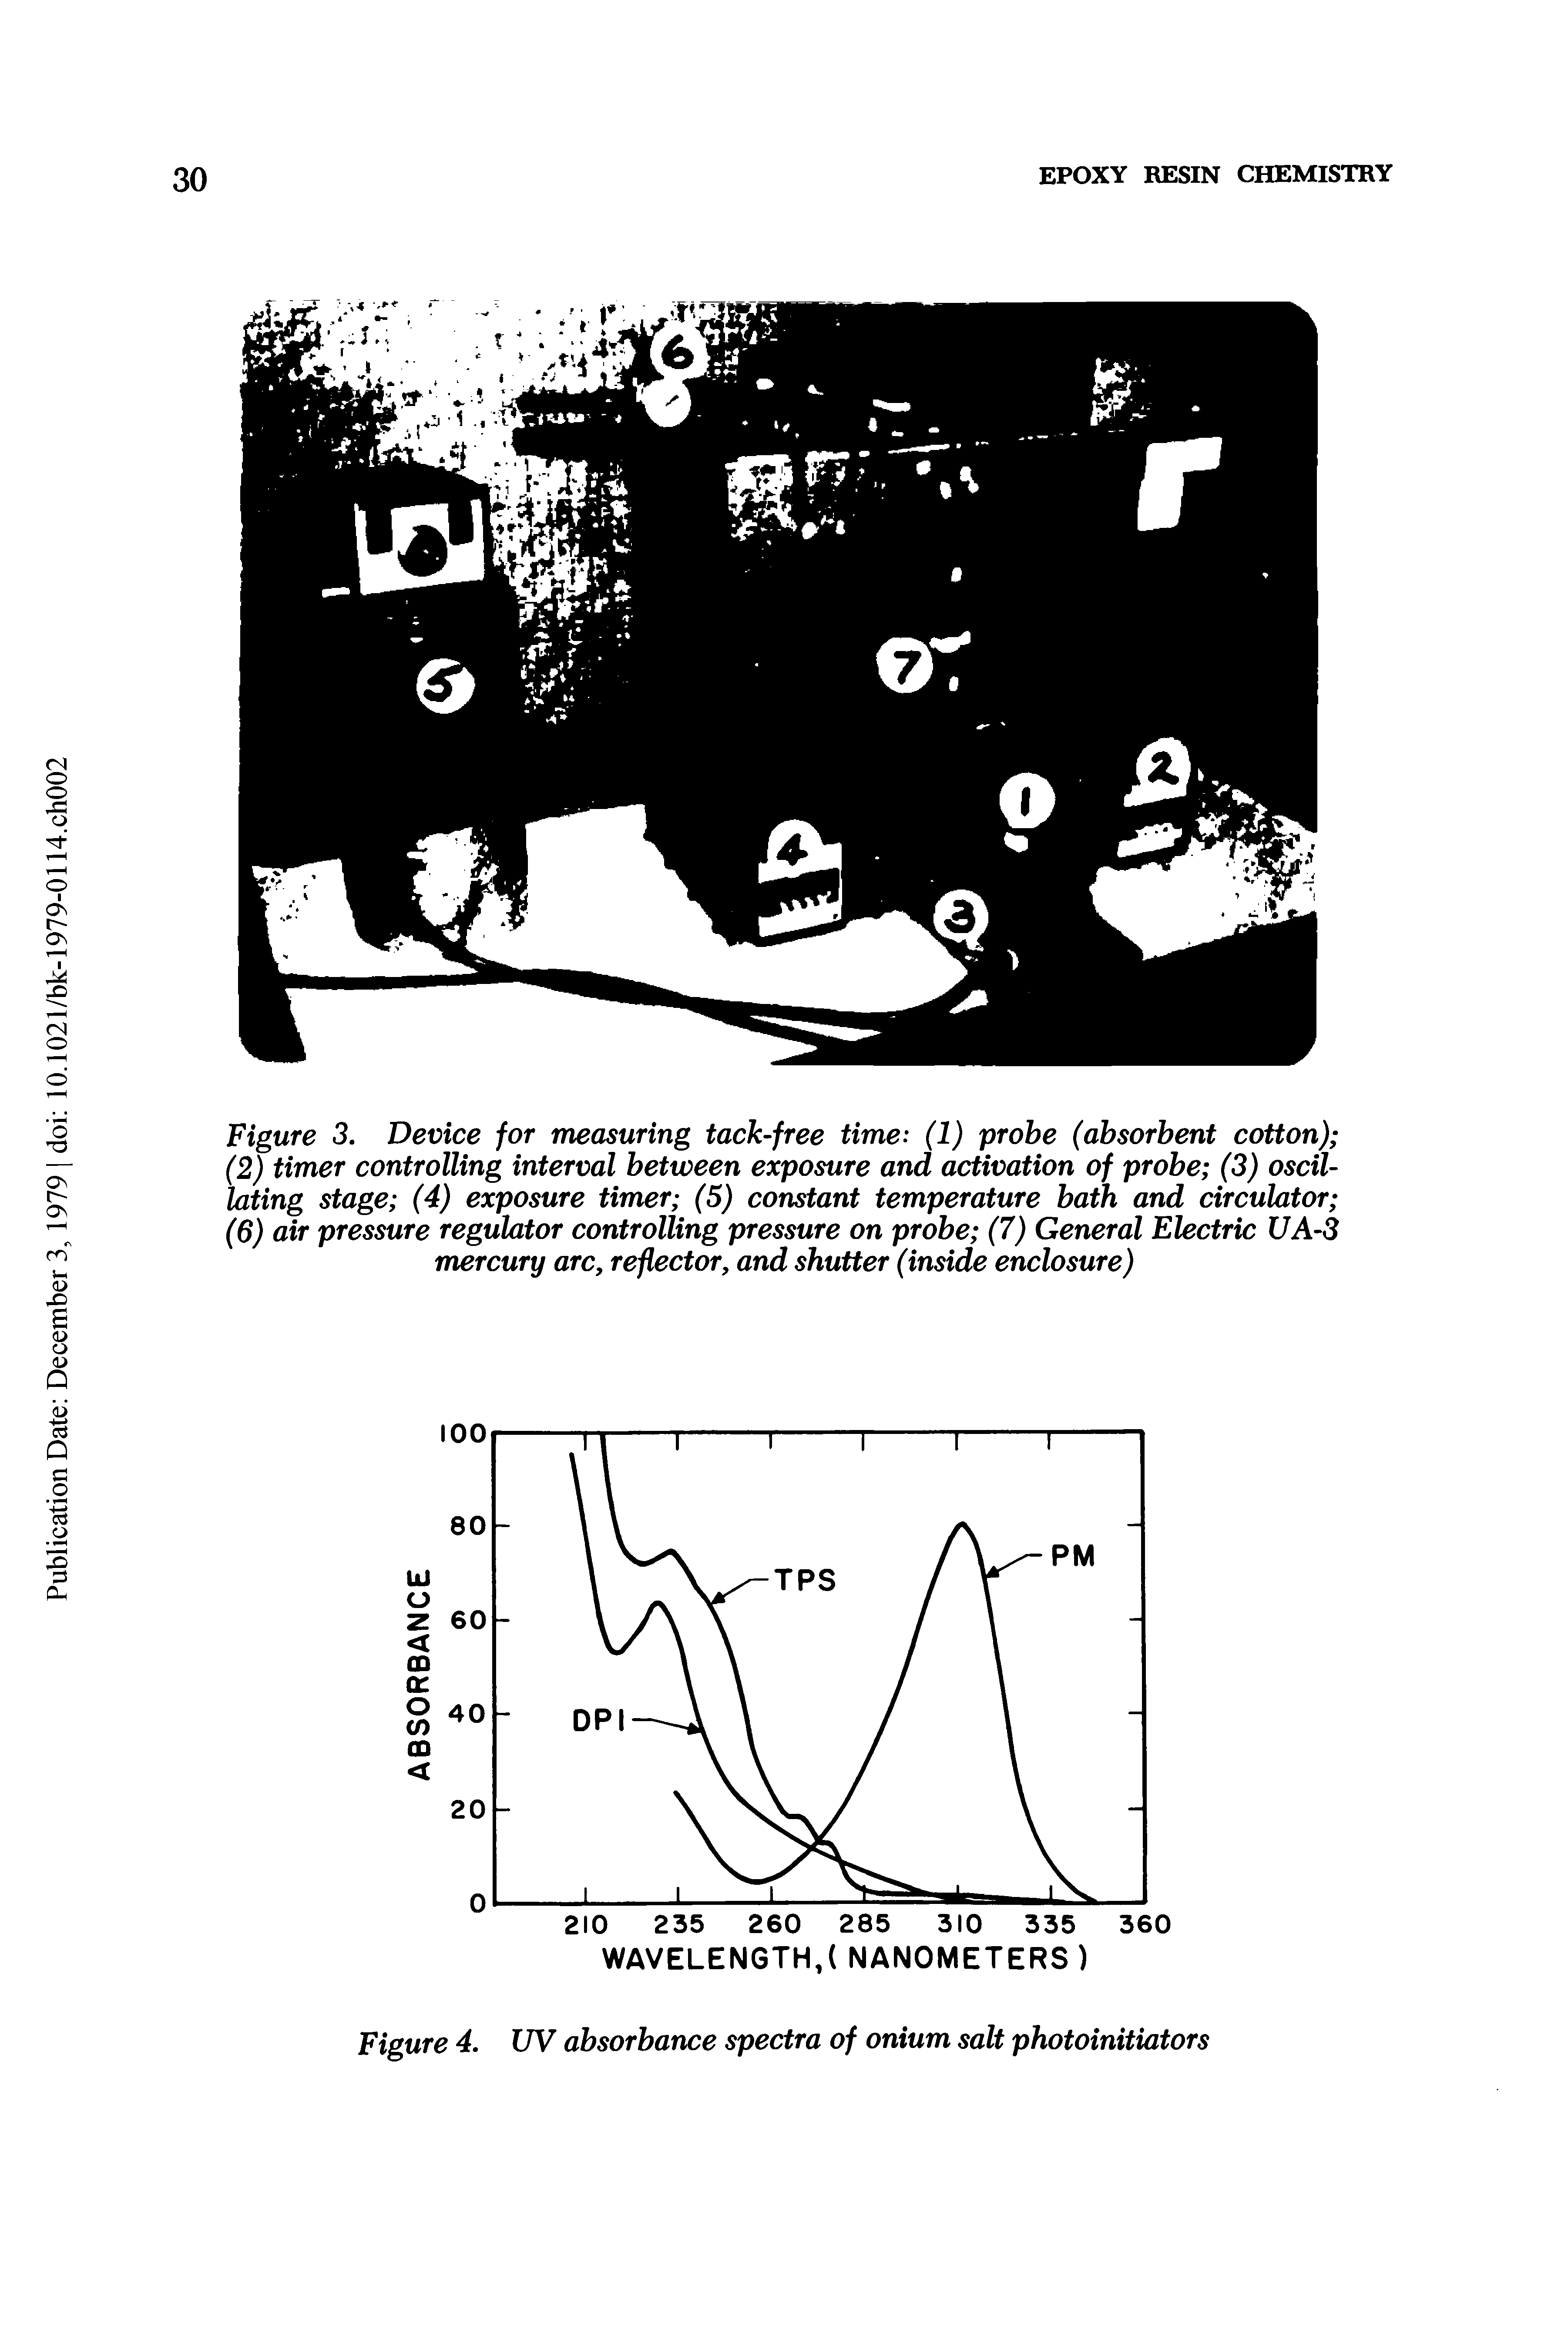 Figure 4. UV absorbance spectra of onium salt photoinitiators...